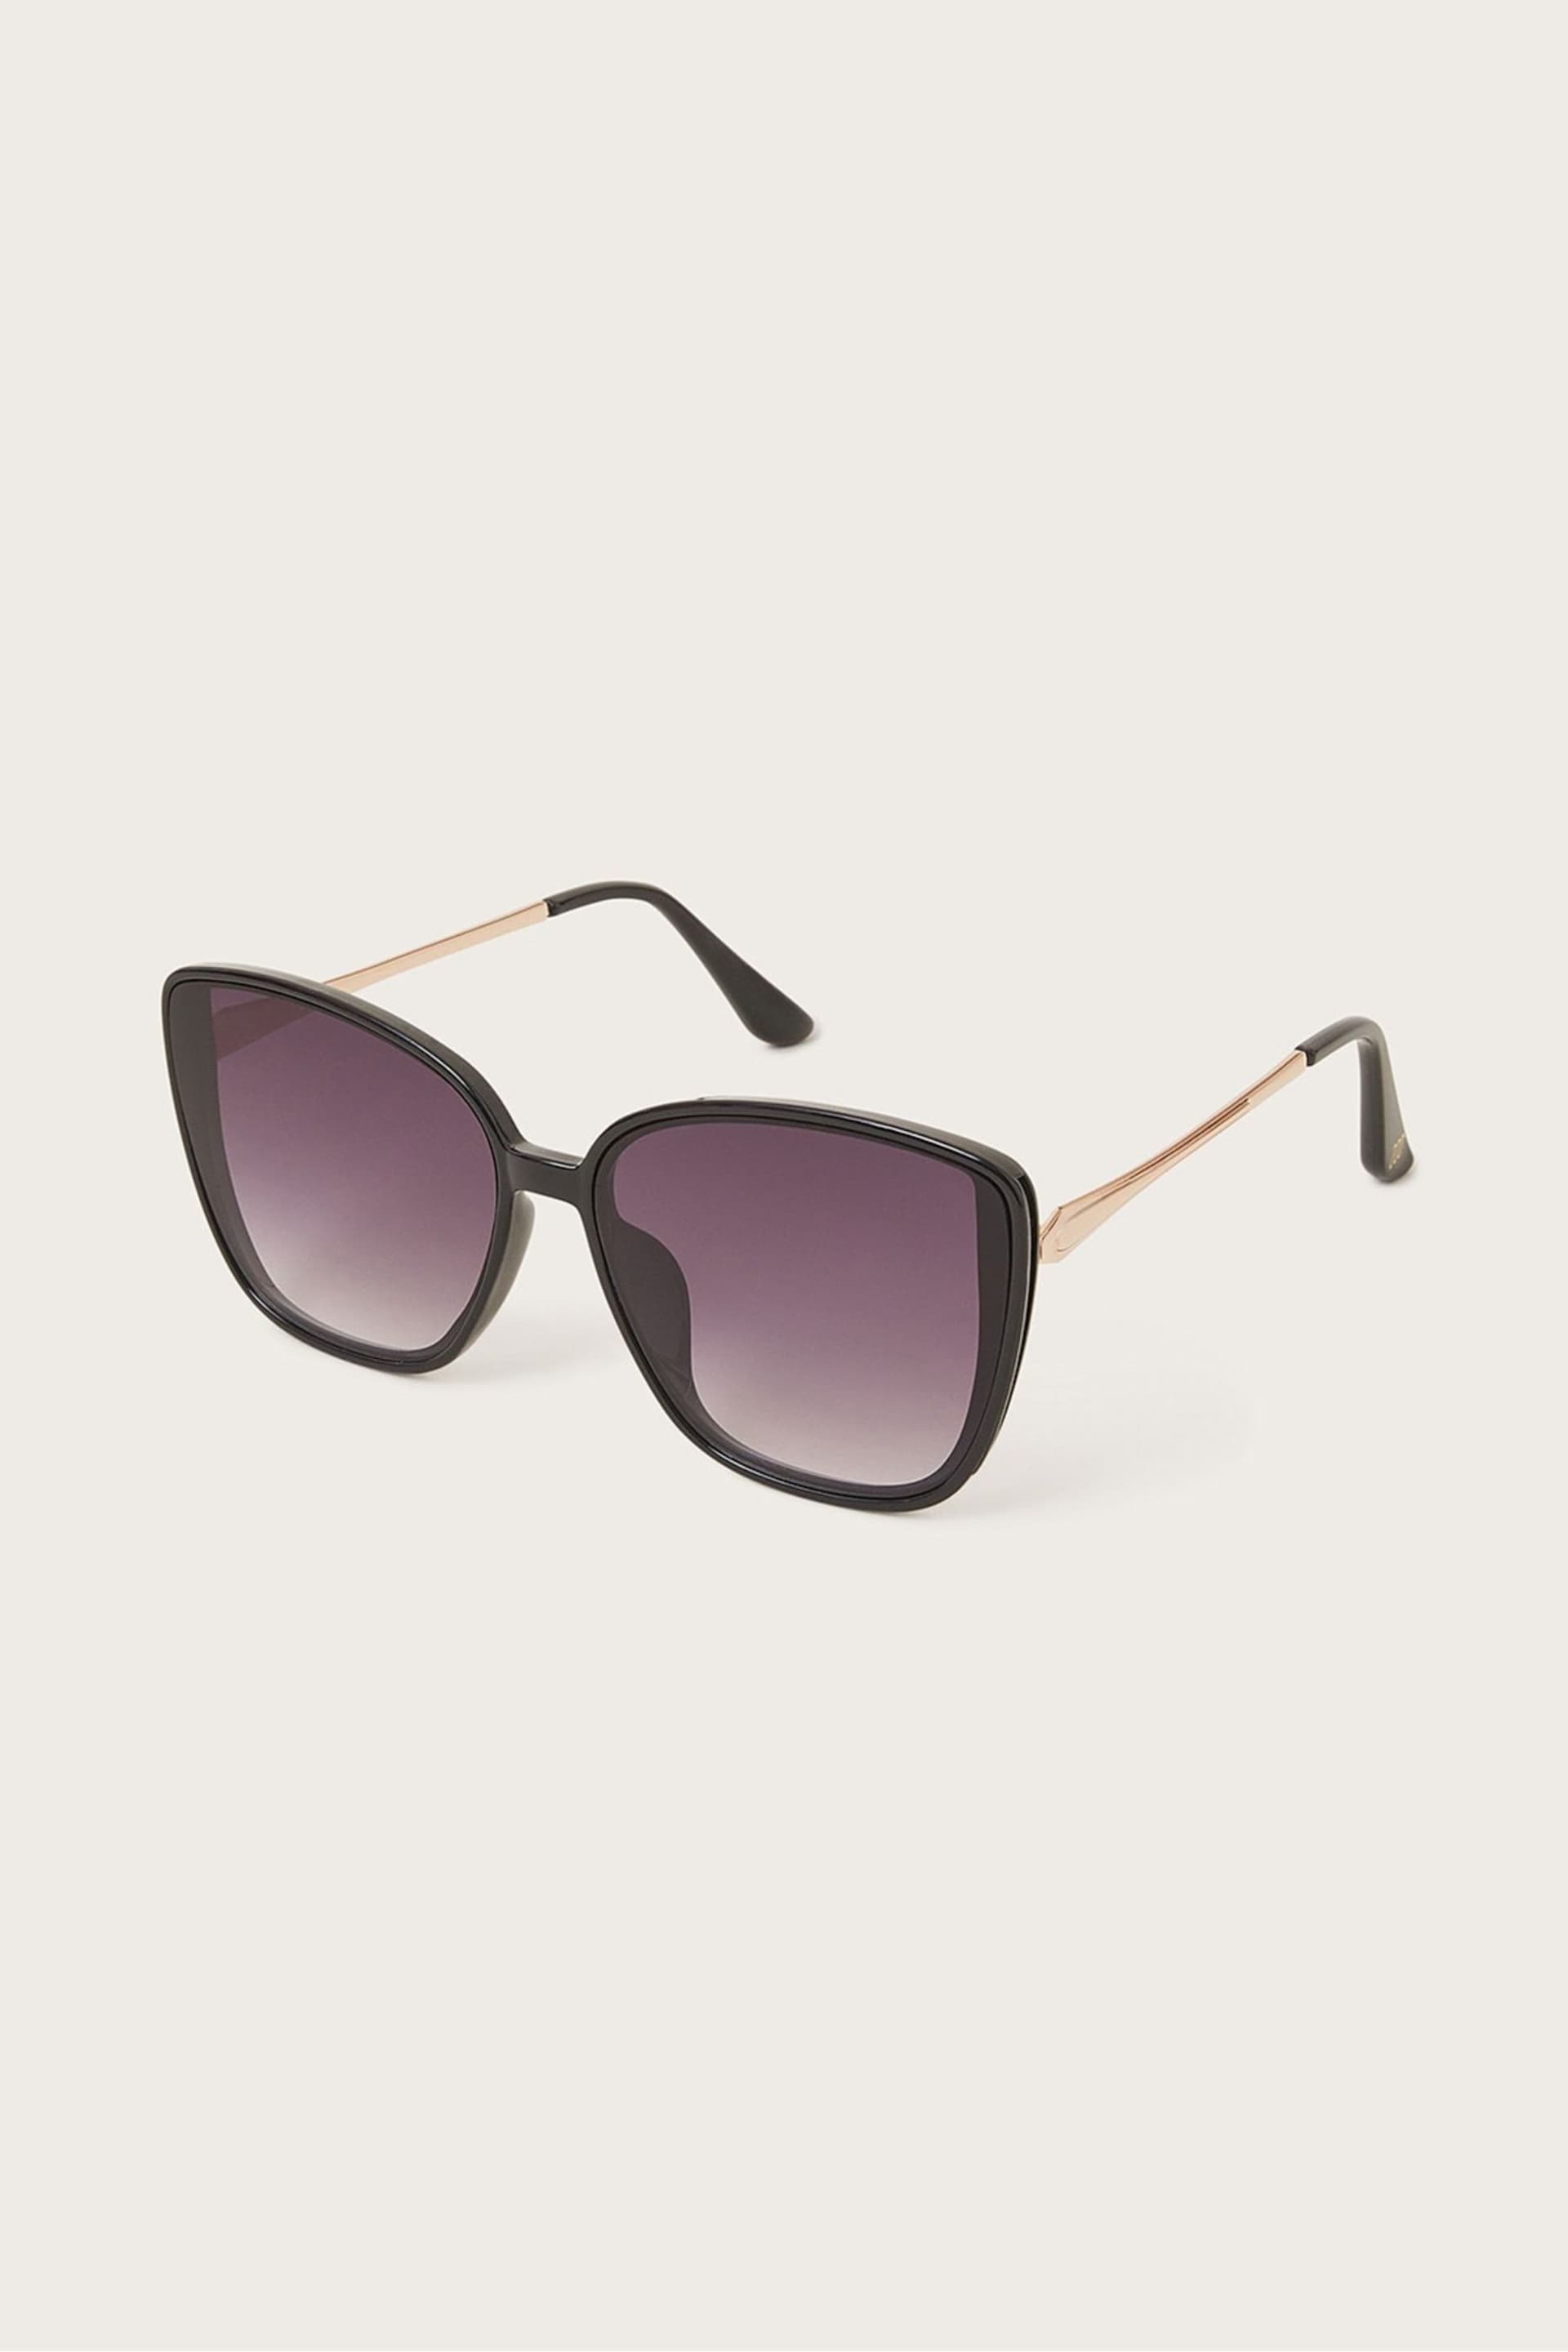 Monsoon Black Oversized Frame Sunglasses - Image 1 of 2